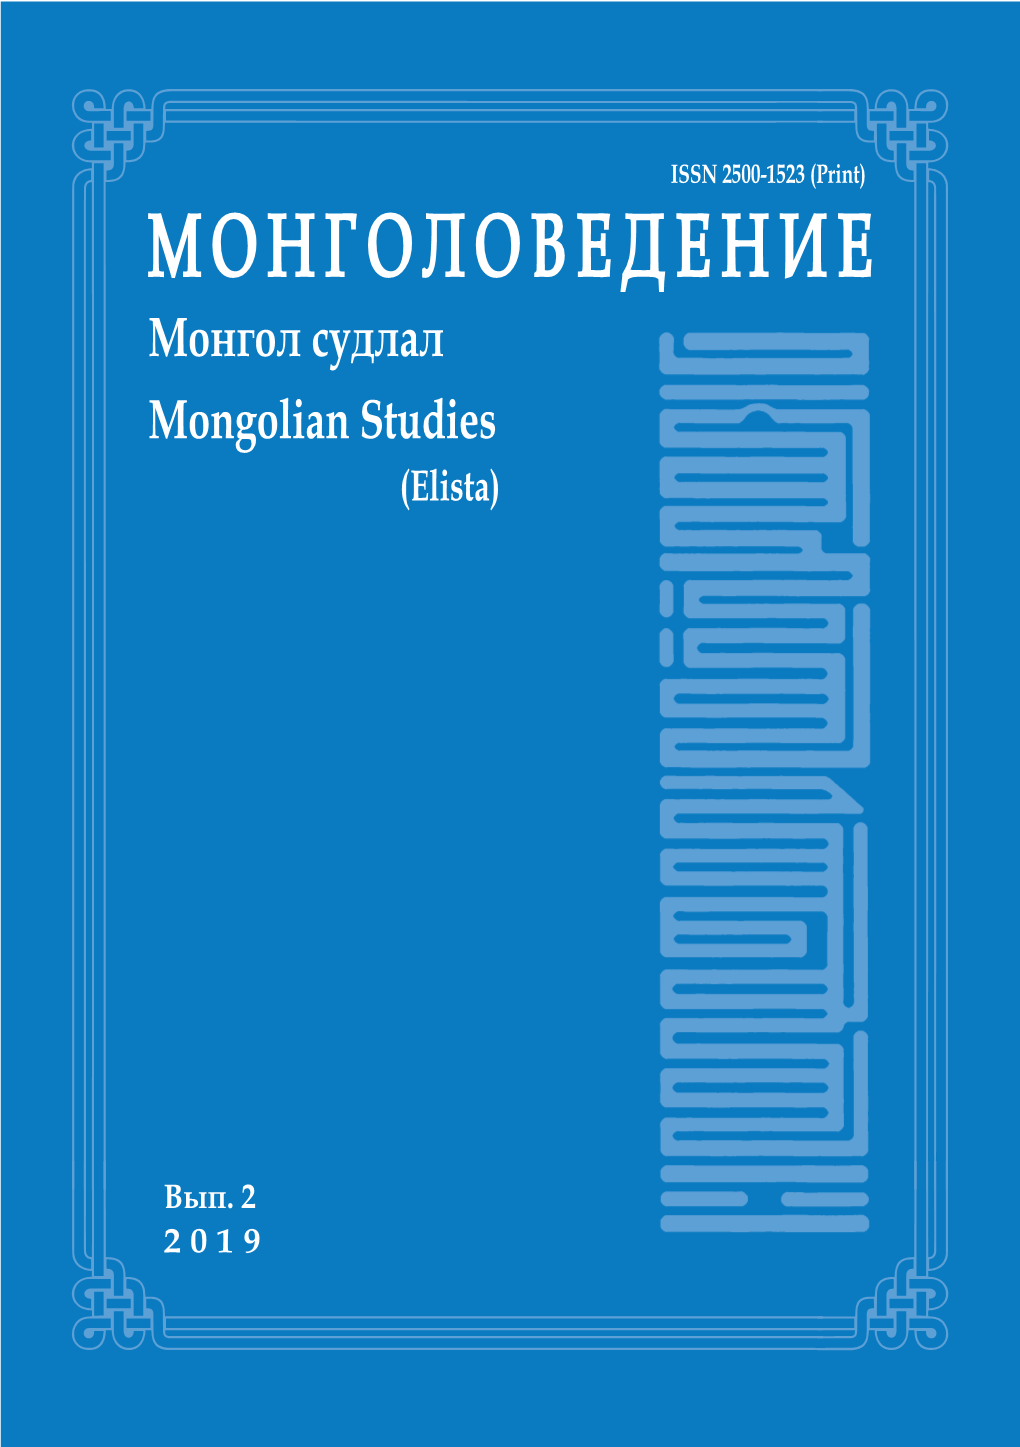 М О Н Г О Л О В Е Д Е Н И Е Монгол Судлал Mongolian Studies (Elista)